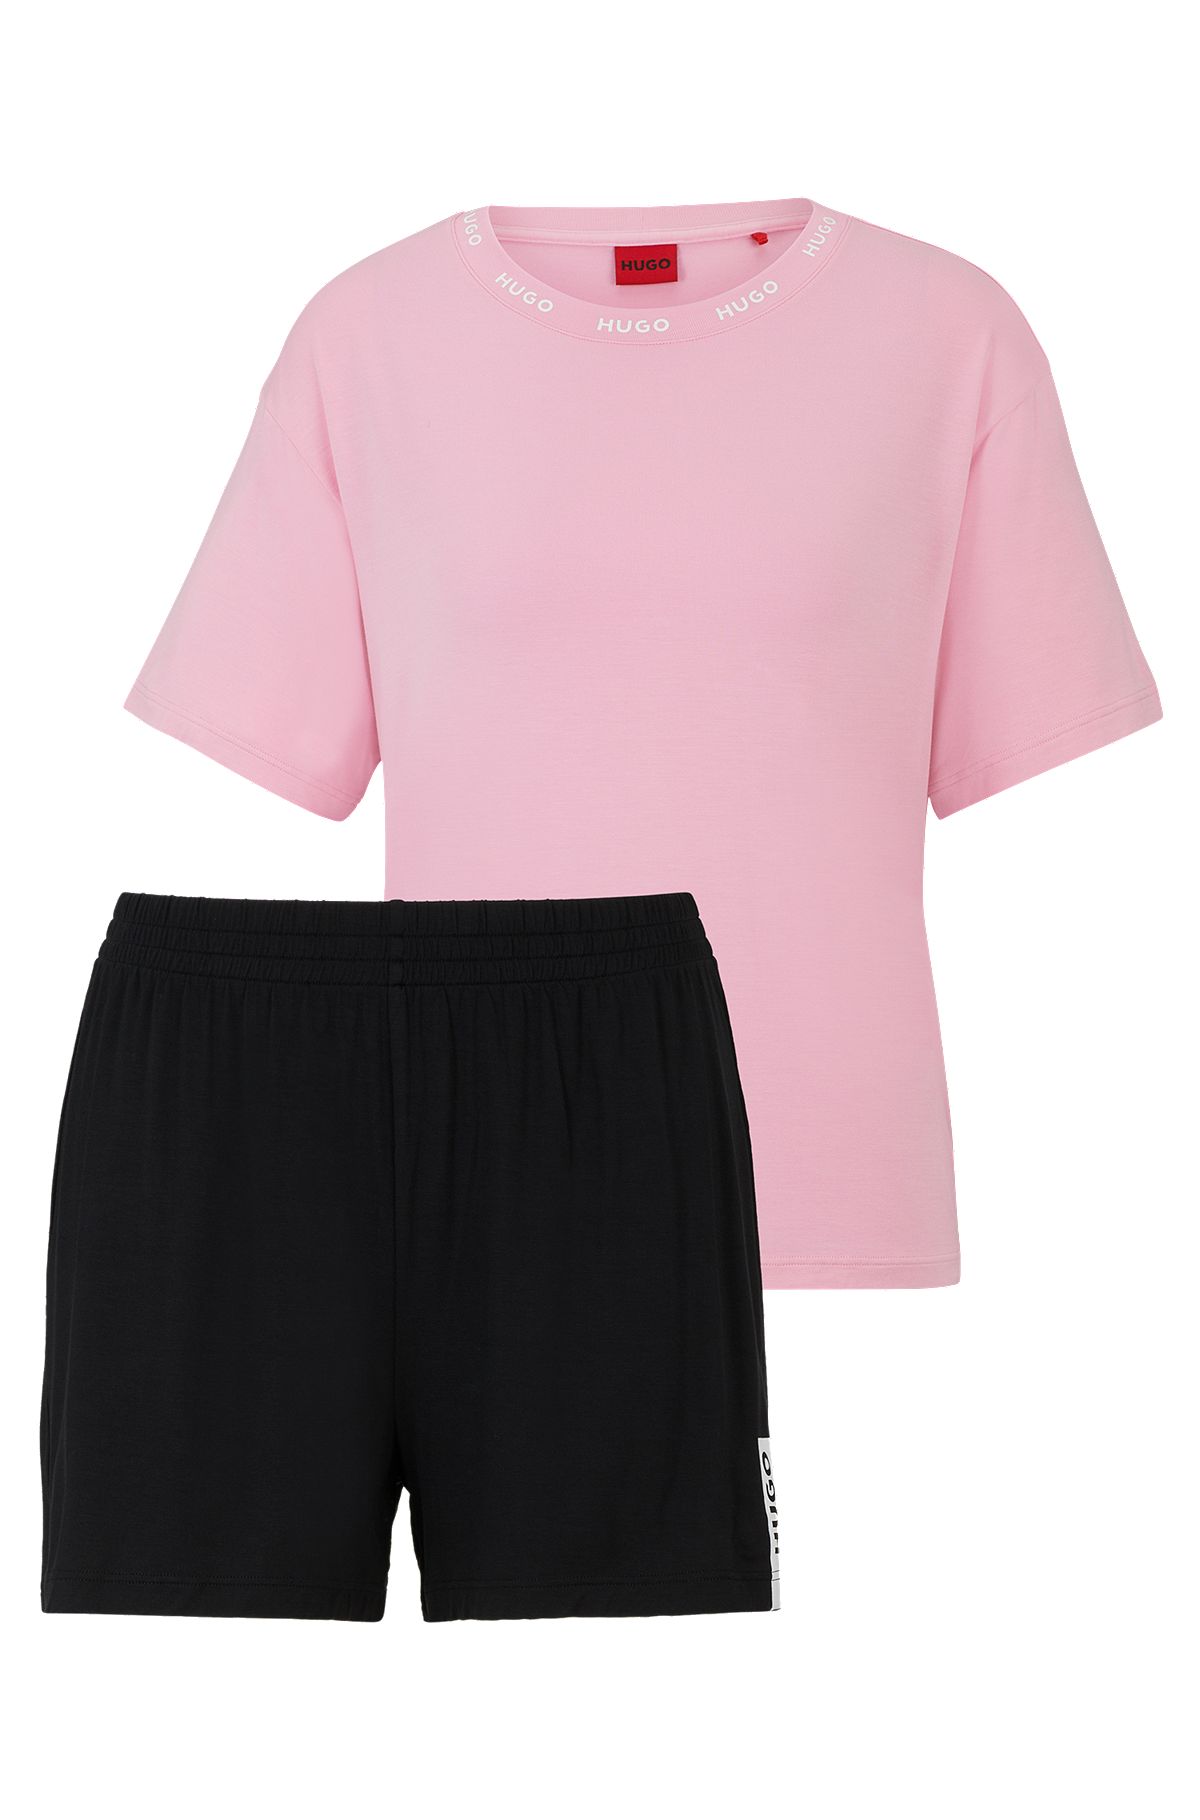 Stretch-jersey pyjamas with contrast logo details, Black / Pink